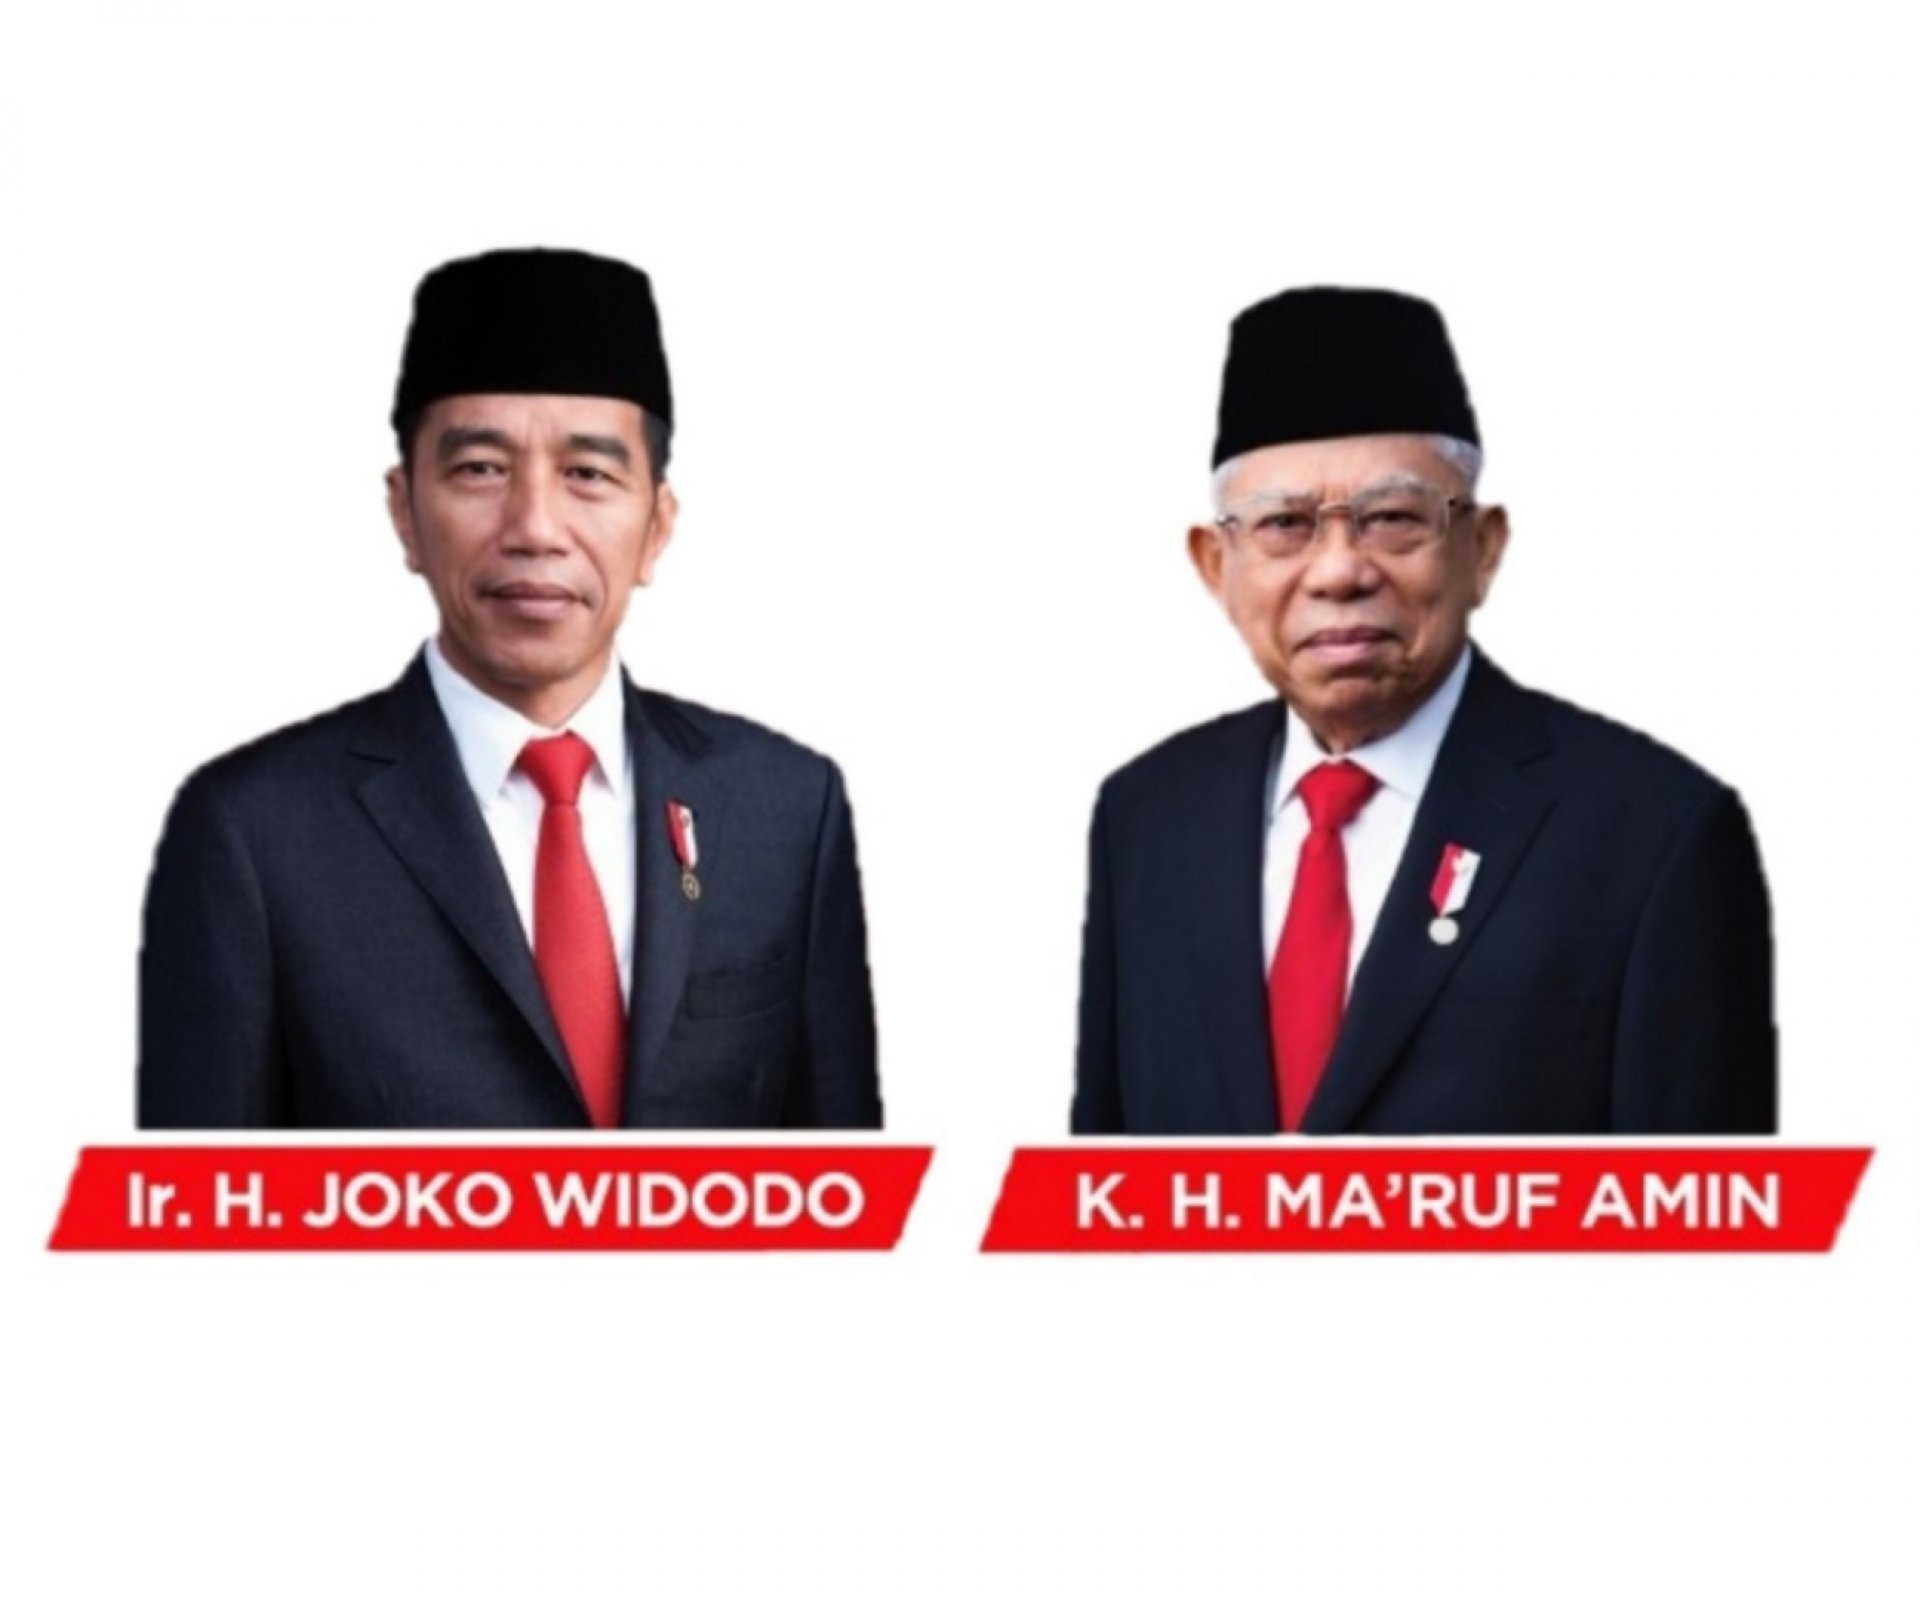 Foto Resmi Presiden dan Wakil Presiden Republik Indonesia Periode 2019-2024